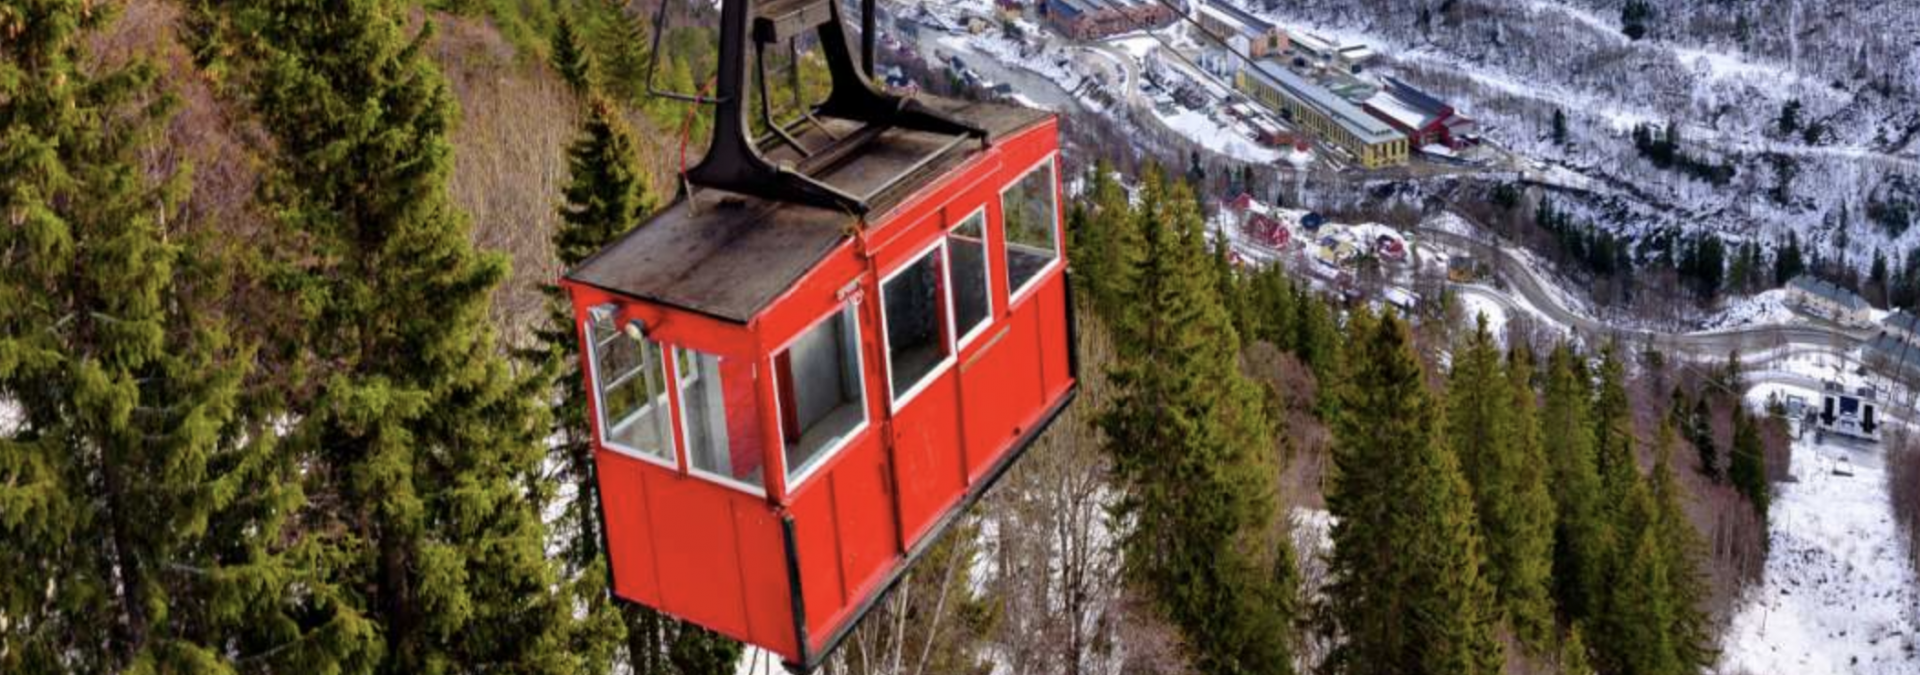 Rjukan, Krossobanen cable car